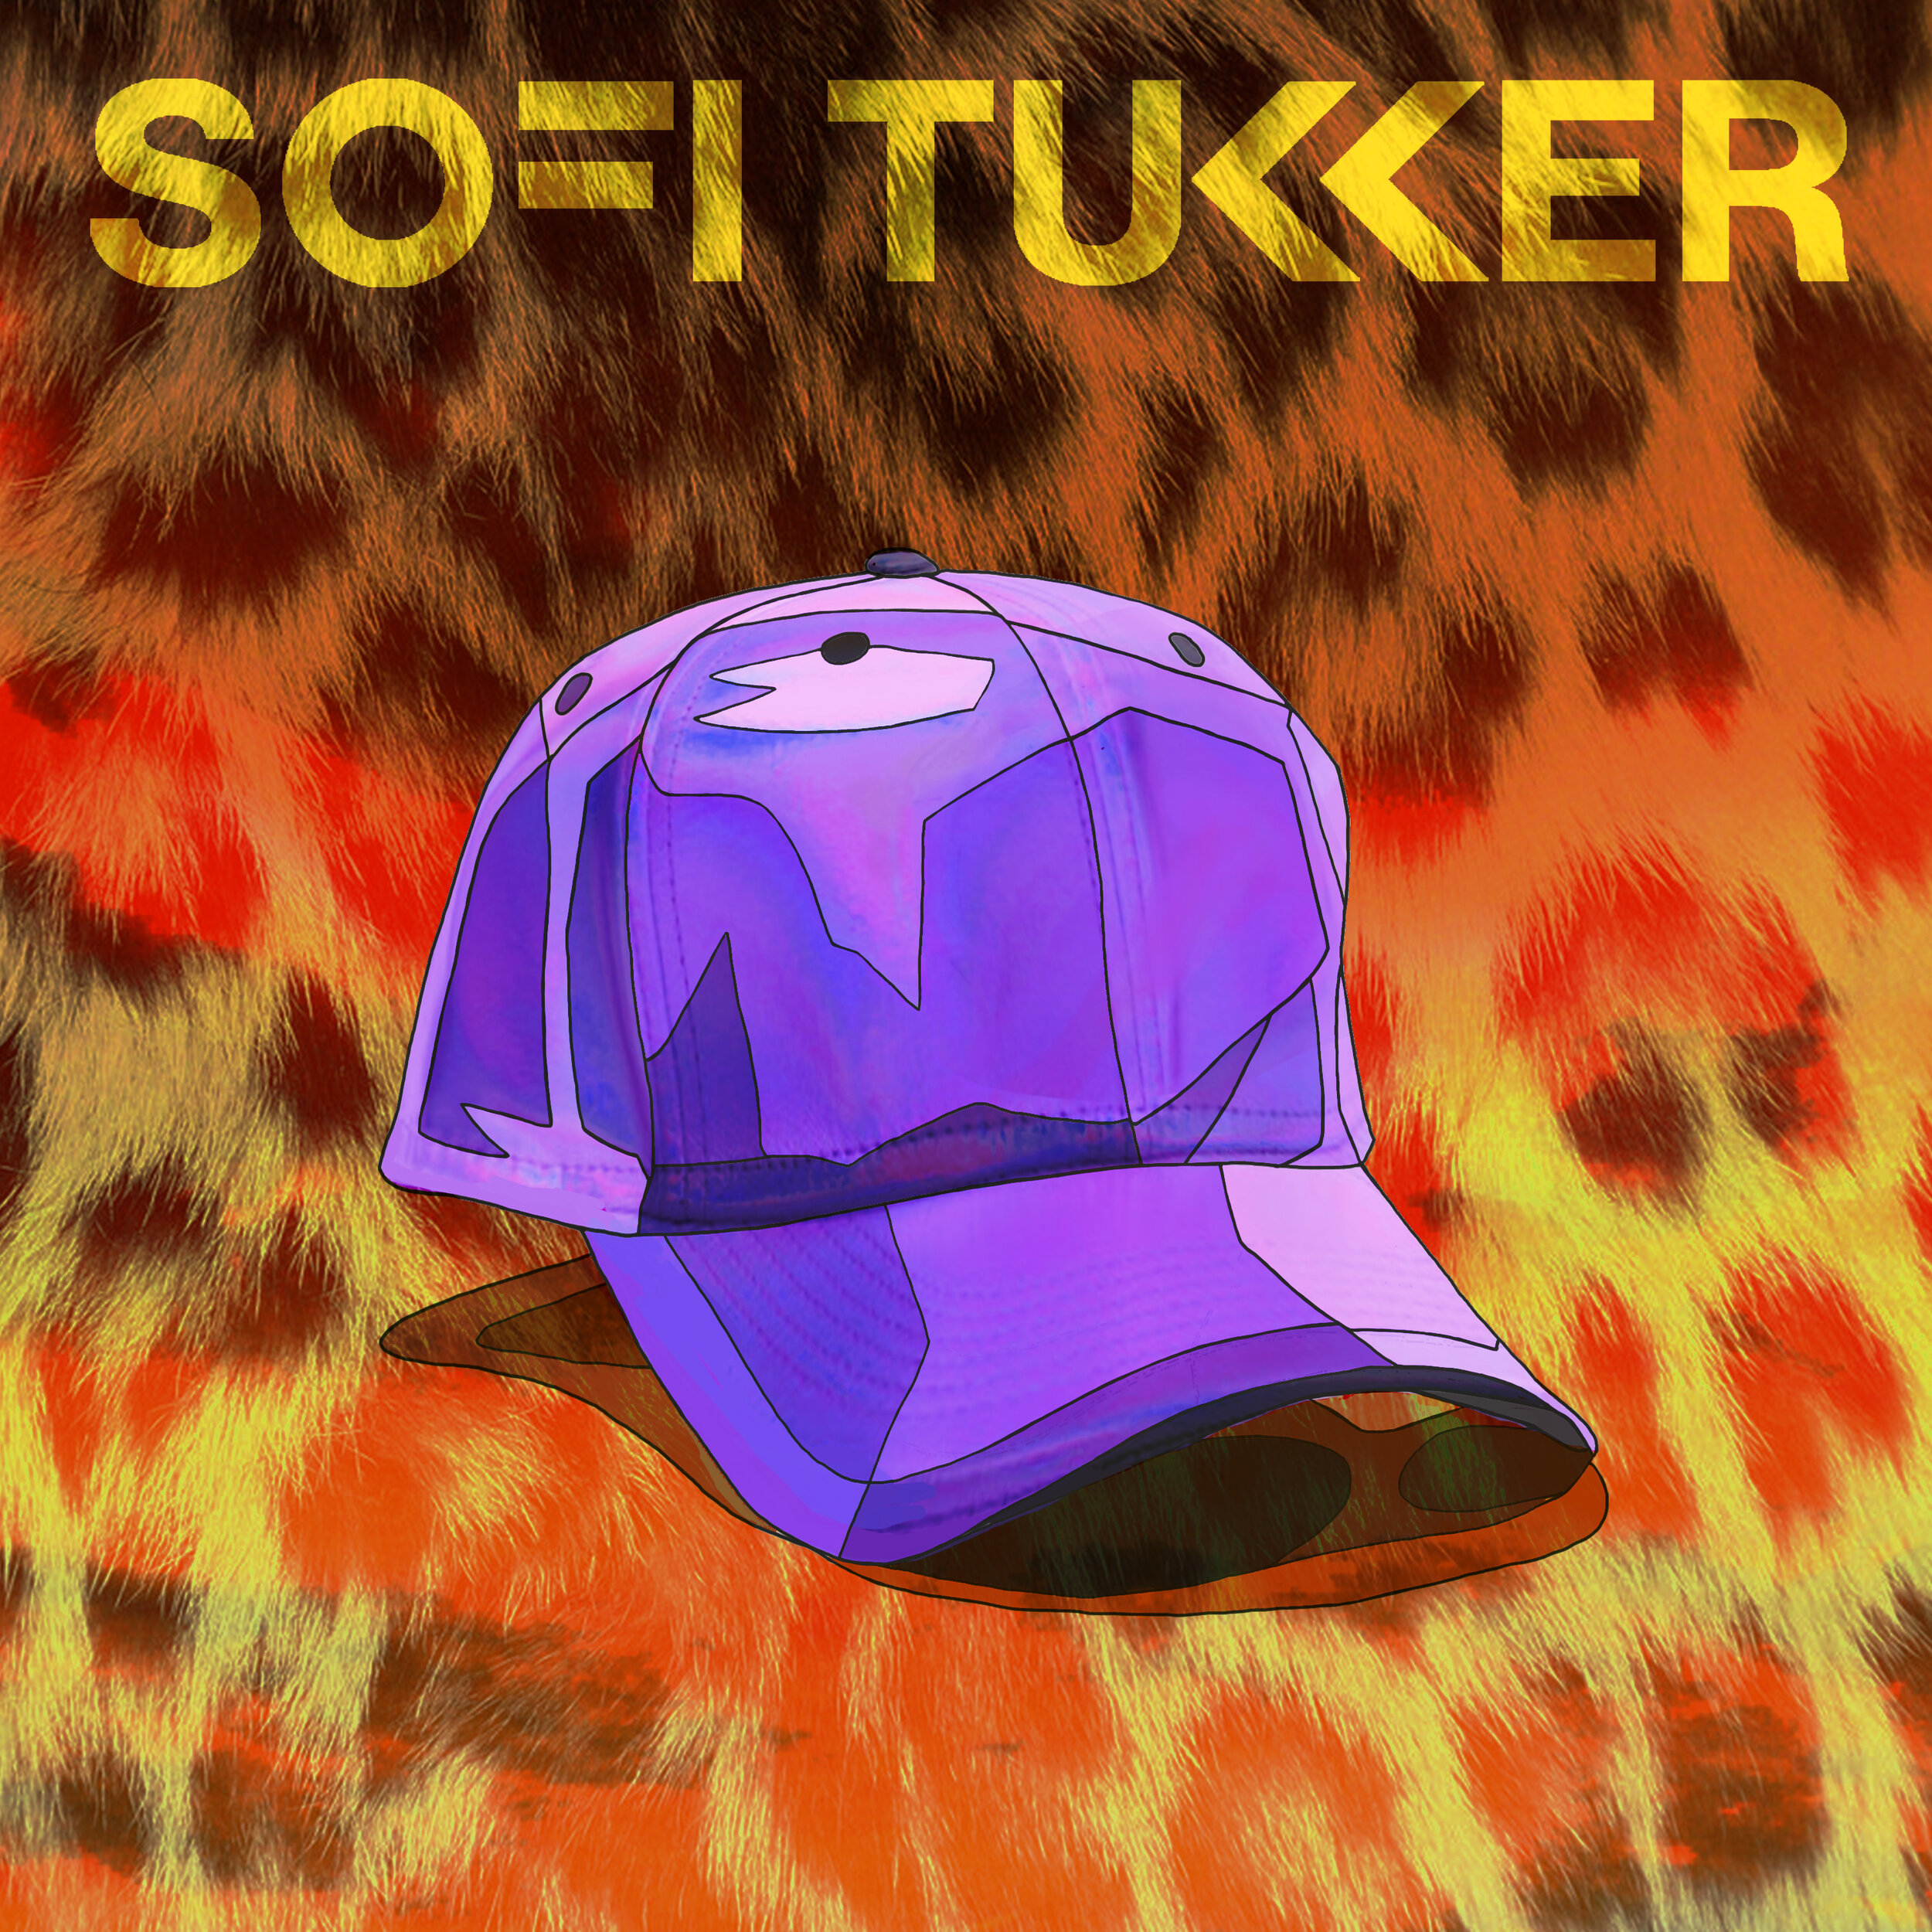 Hat mp3. Sofi Tucker Purple hat. Soffi Tukker Purple hat. Stussy hat Purple. Purple Francis.